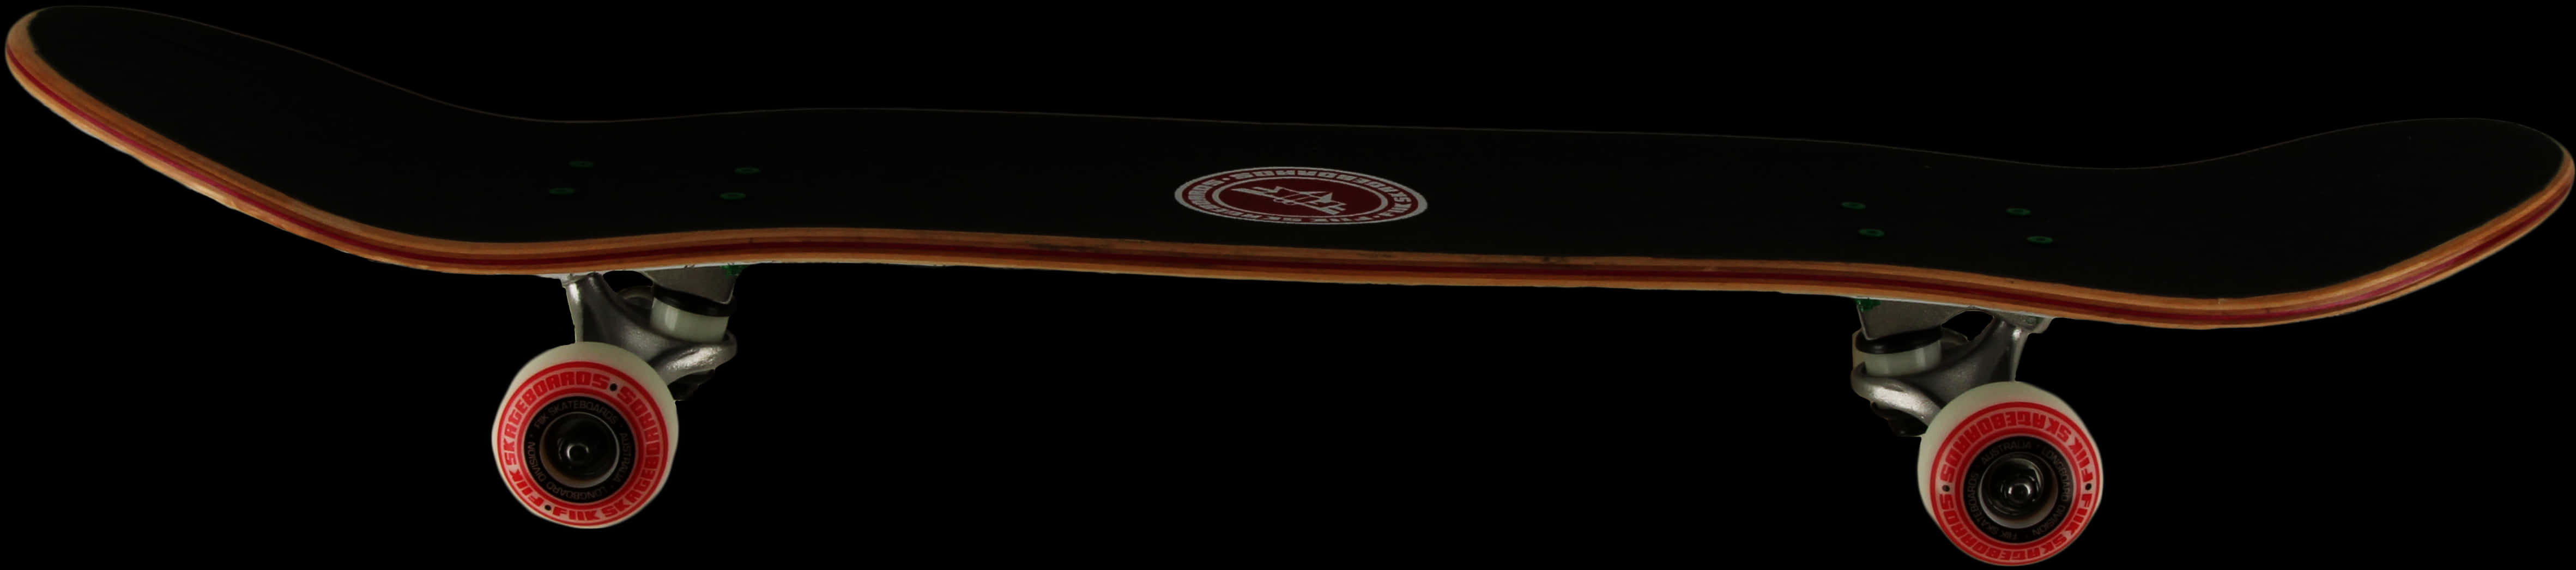 Black Skateboard Red Wheels Side View PNG